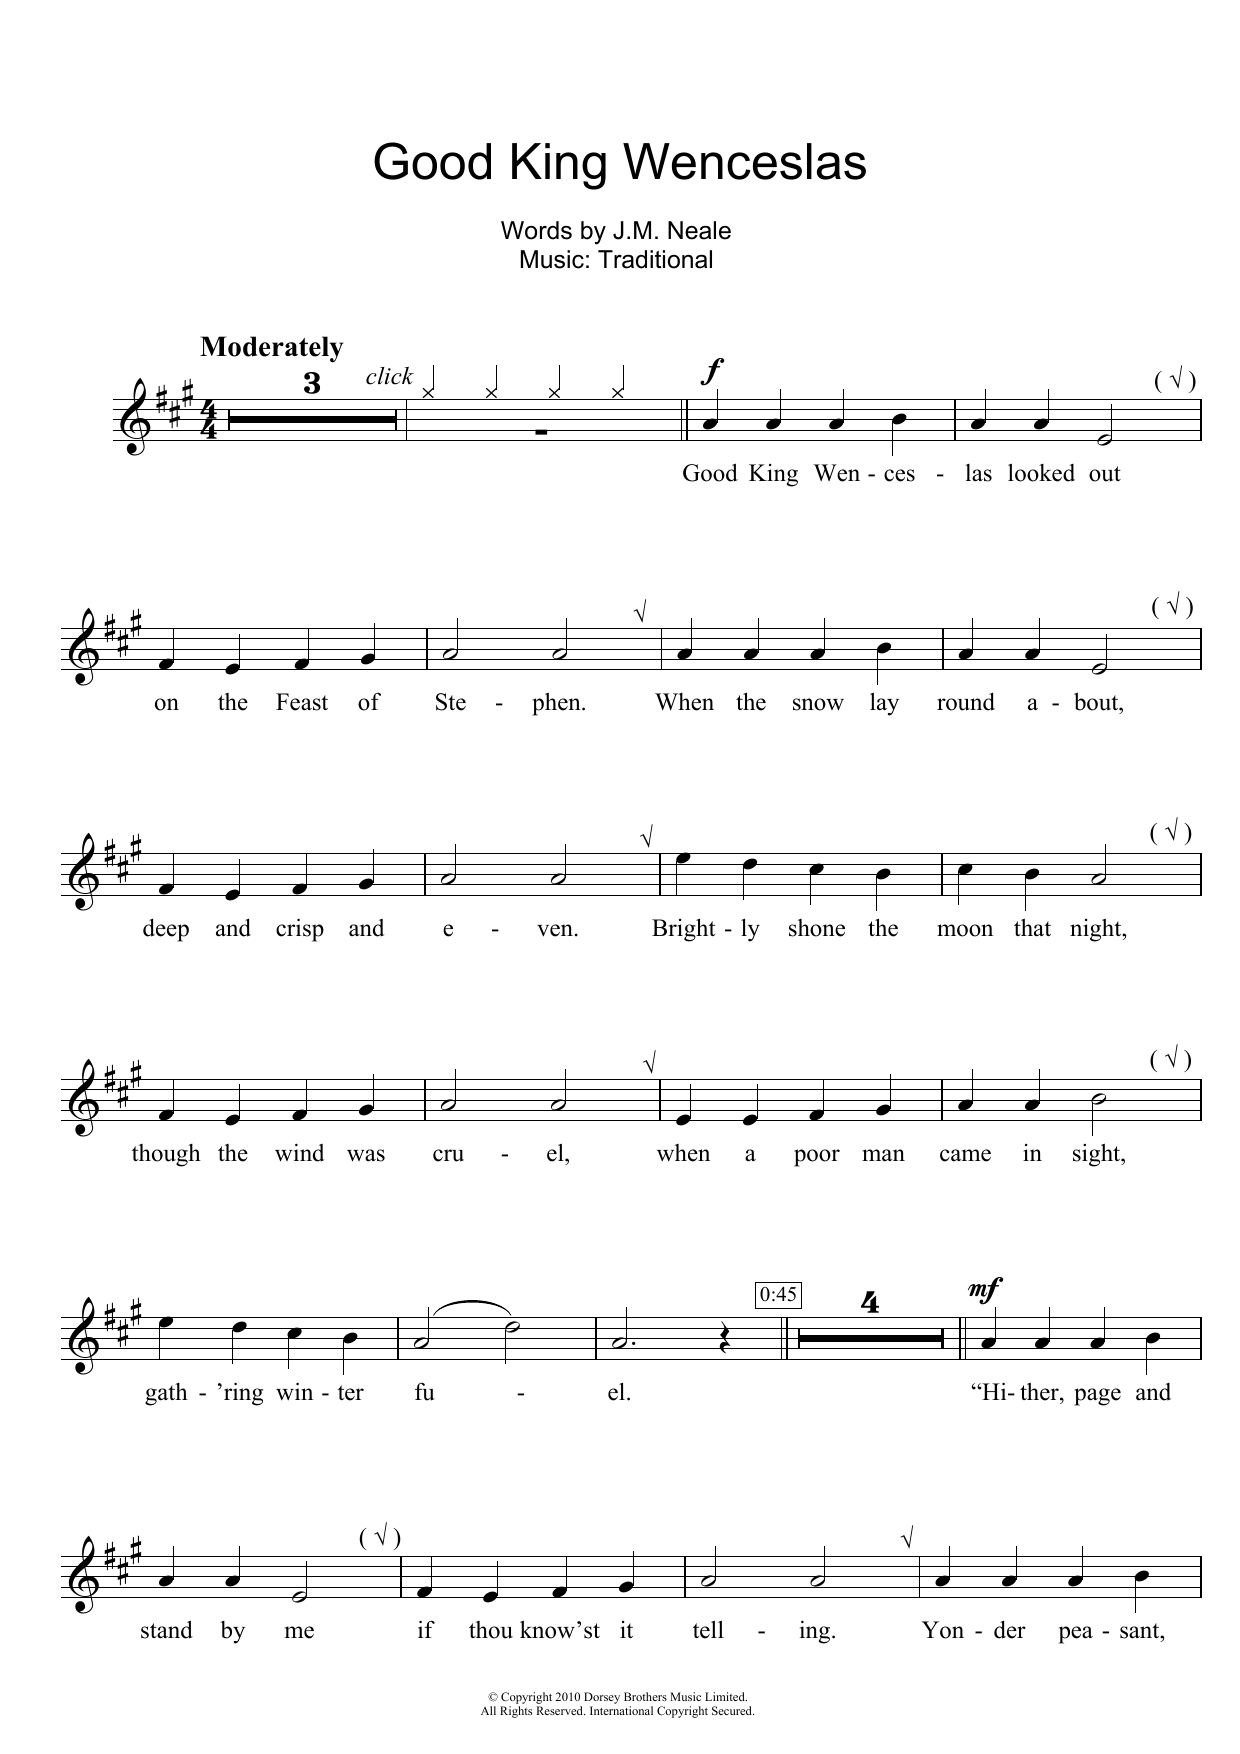 Traditional Carol Good King Wenceslas Sheet Music Notes & Chords for Violin - Download or Print PDF